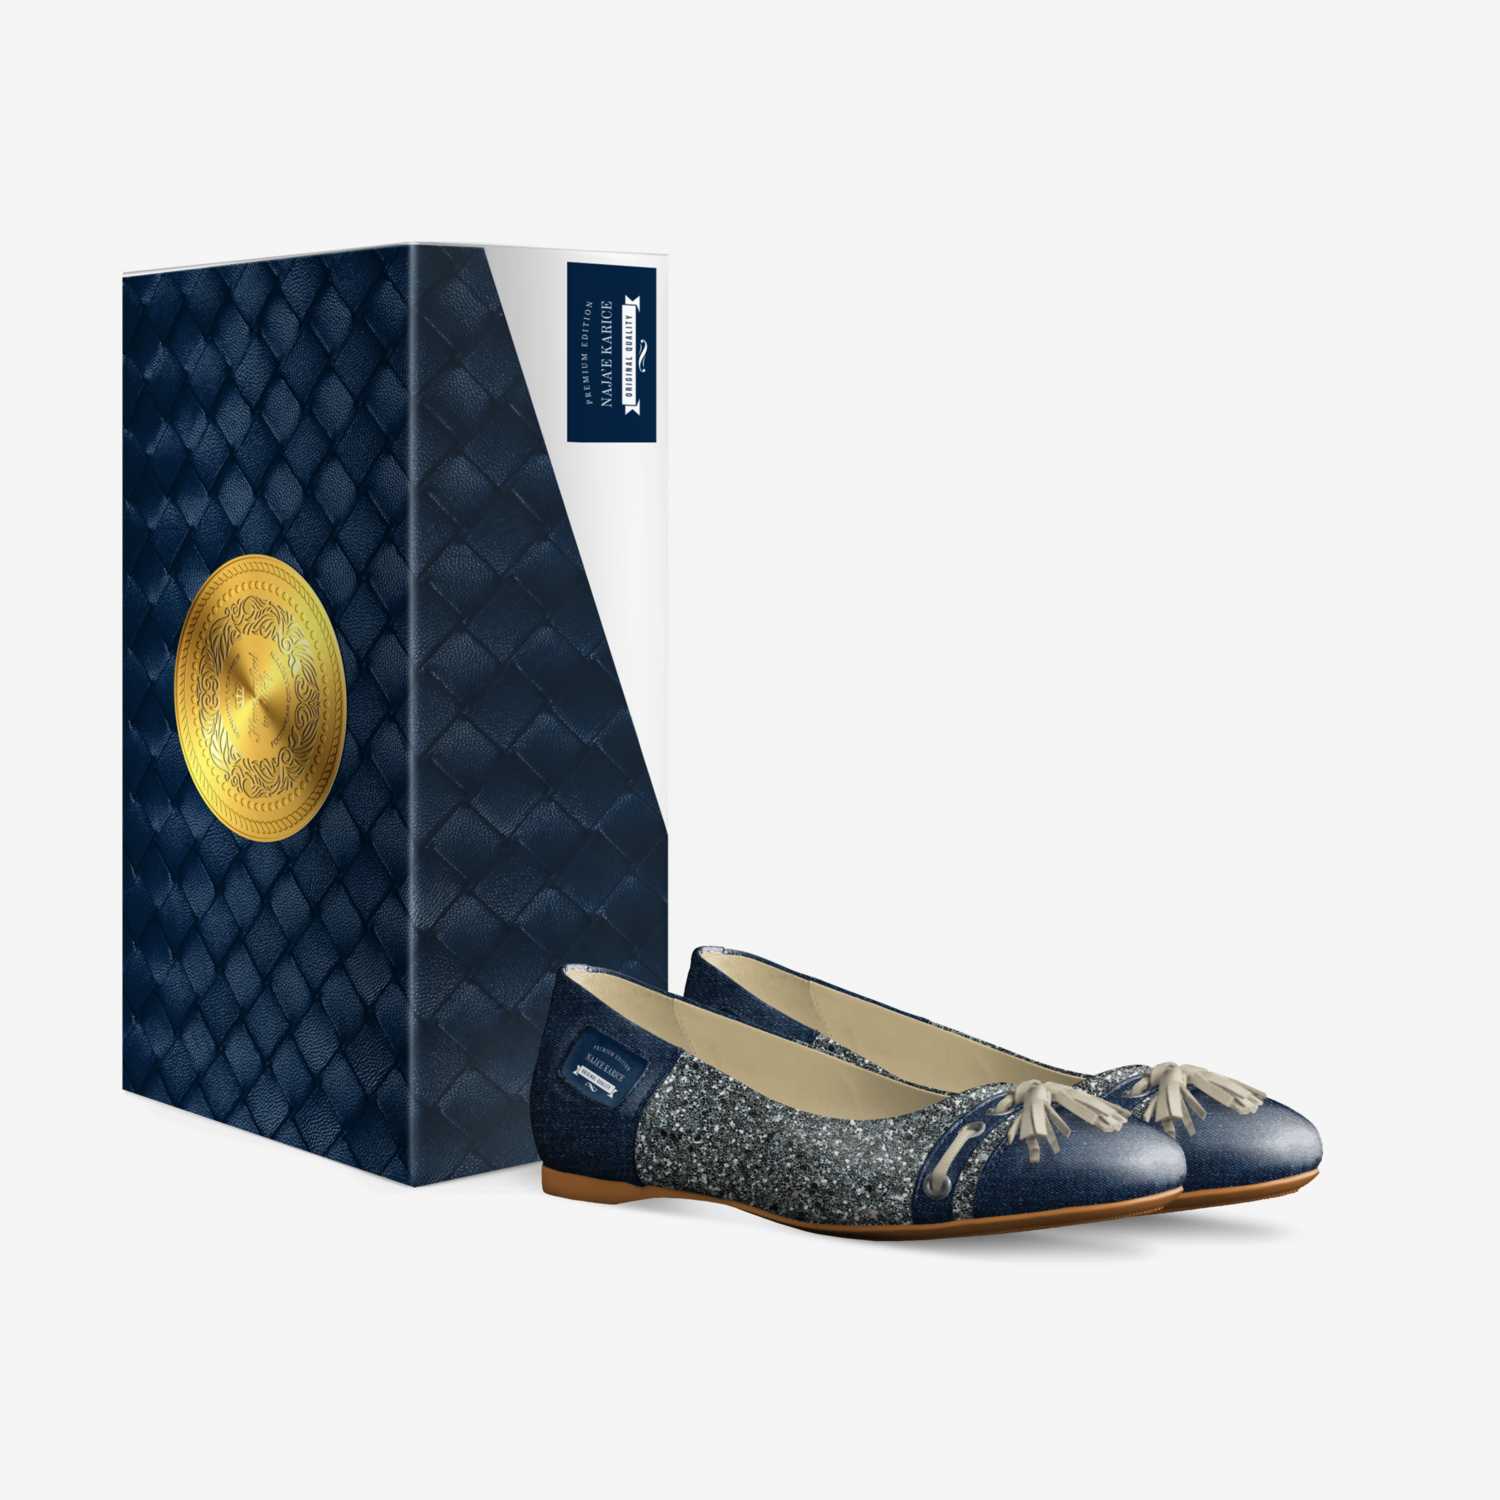 Naja'e Karice custom made in Italy shoes by Brent Dobbins | Box view